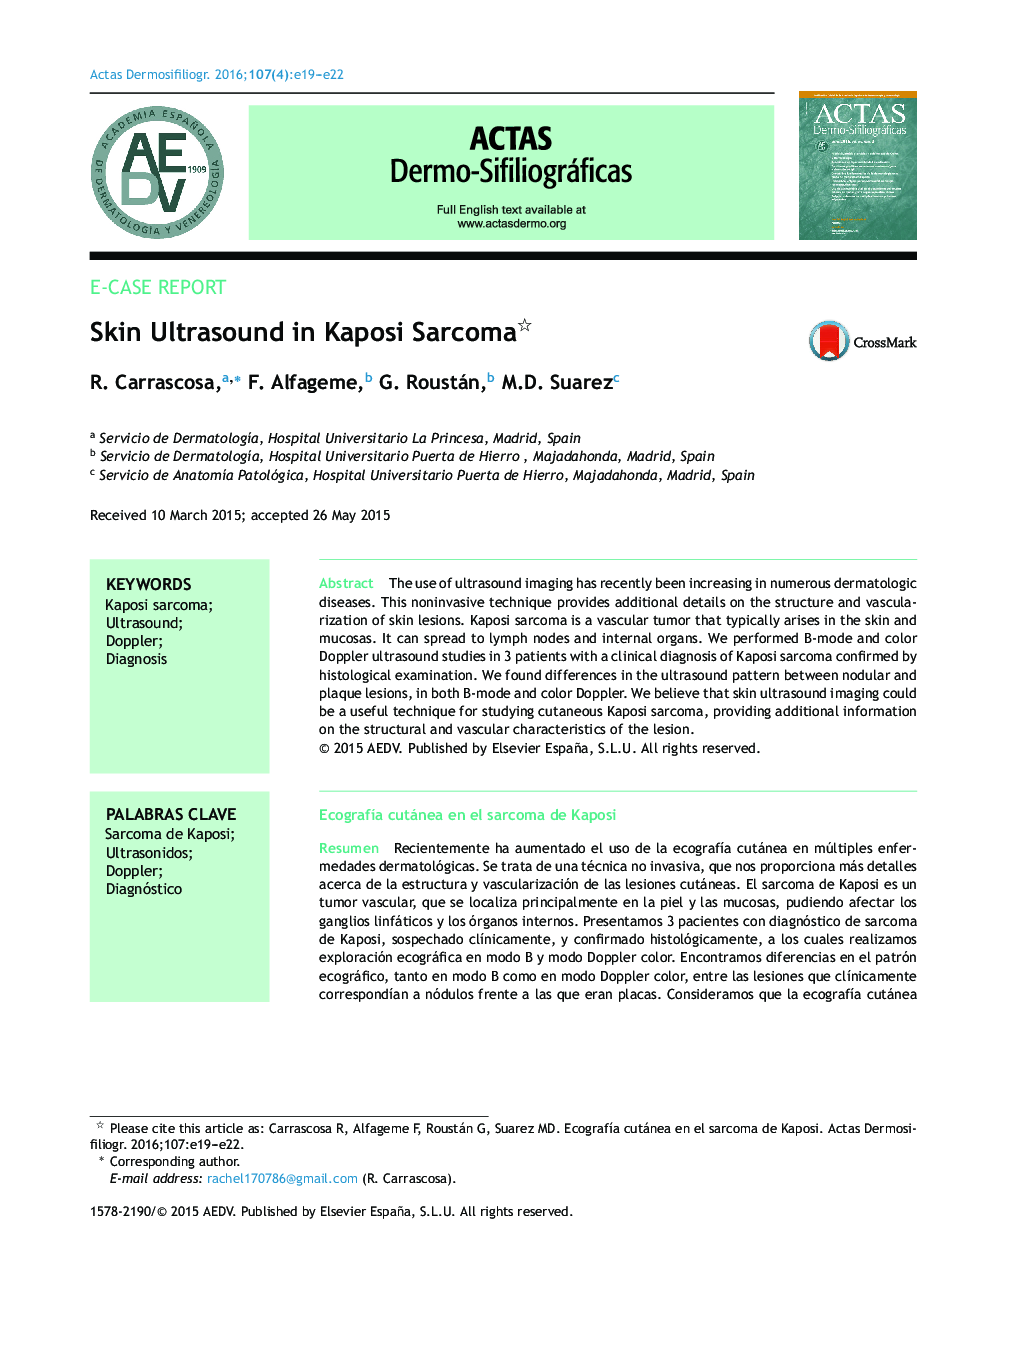 Skin Ultrasound in Kaposi Sarcoma 